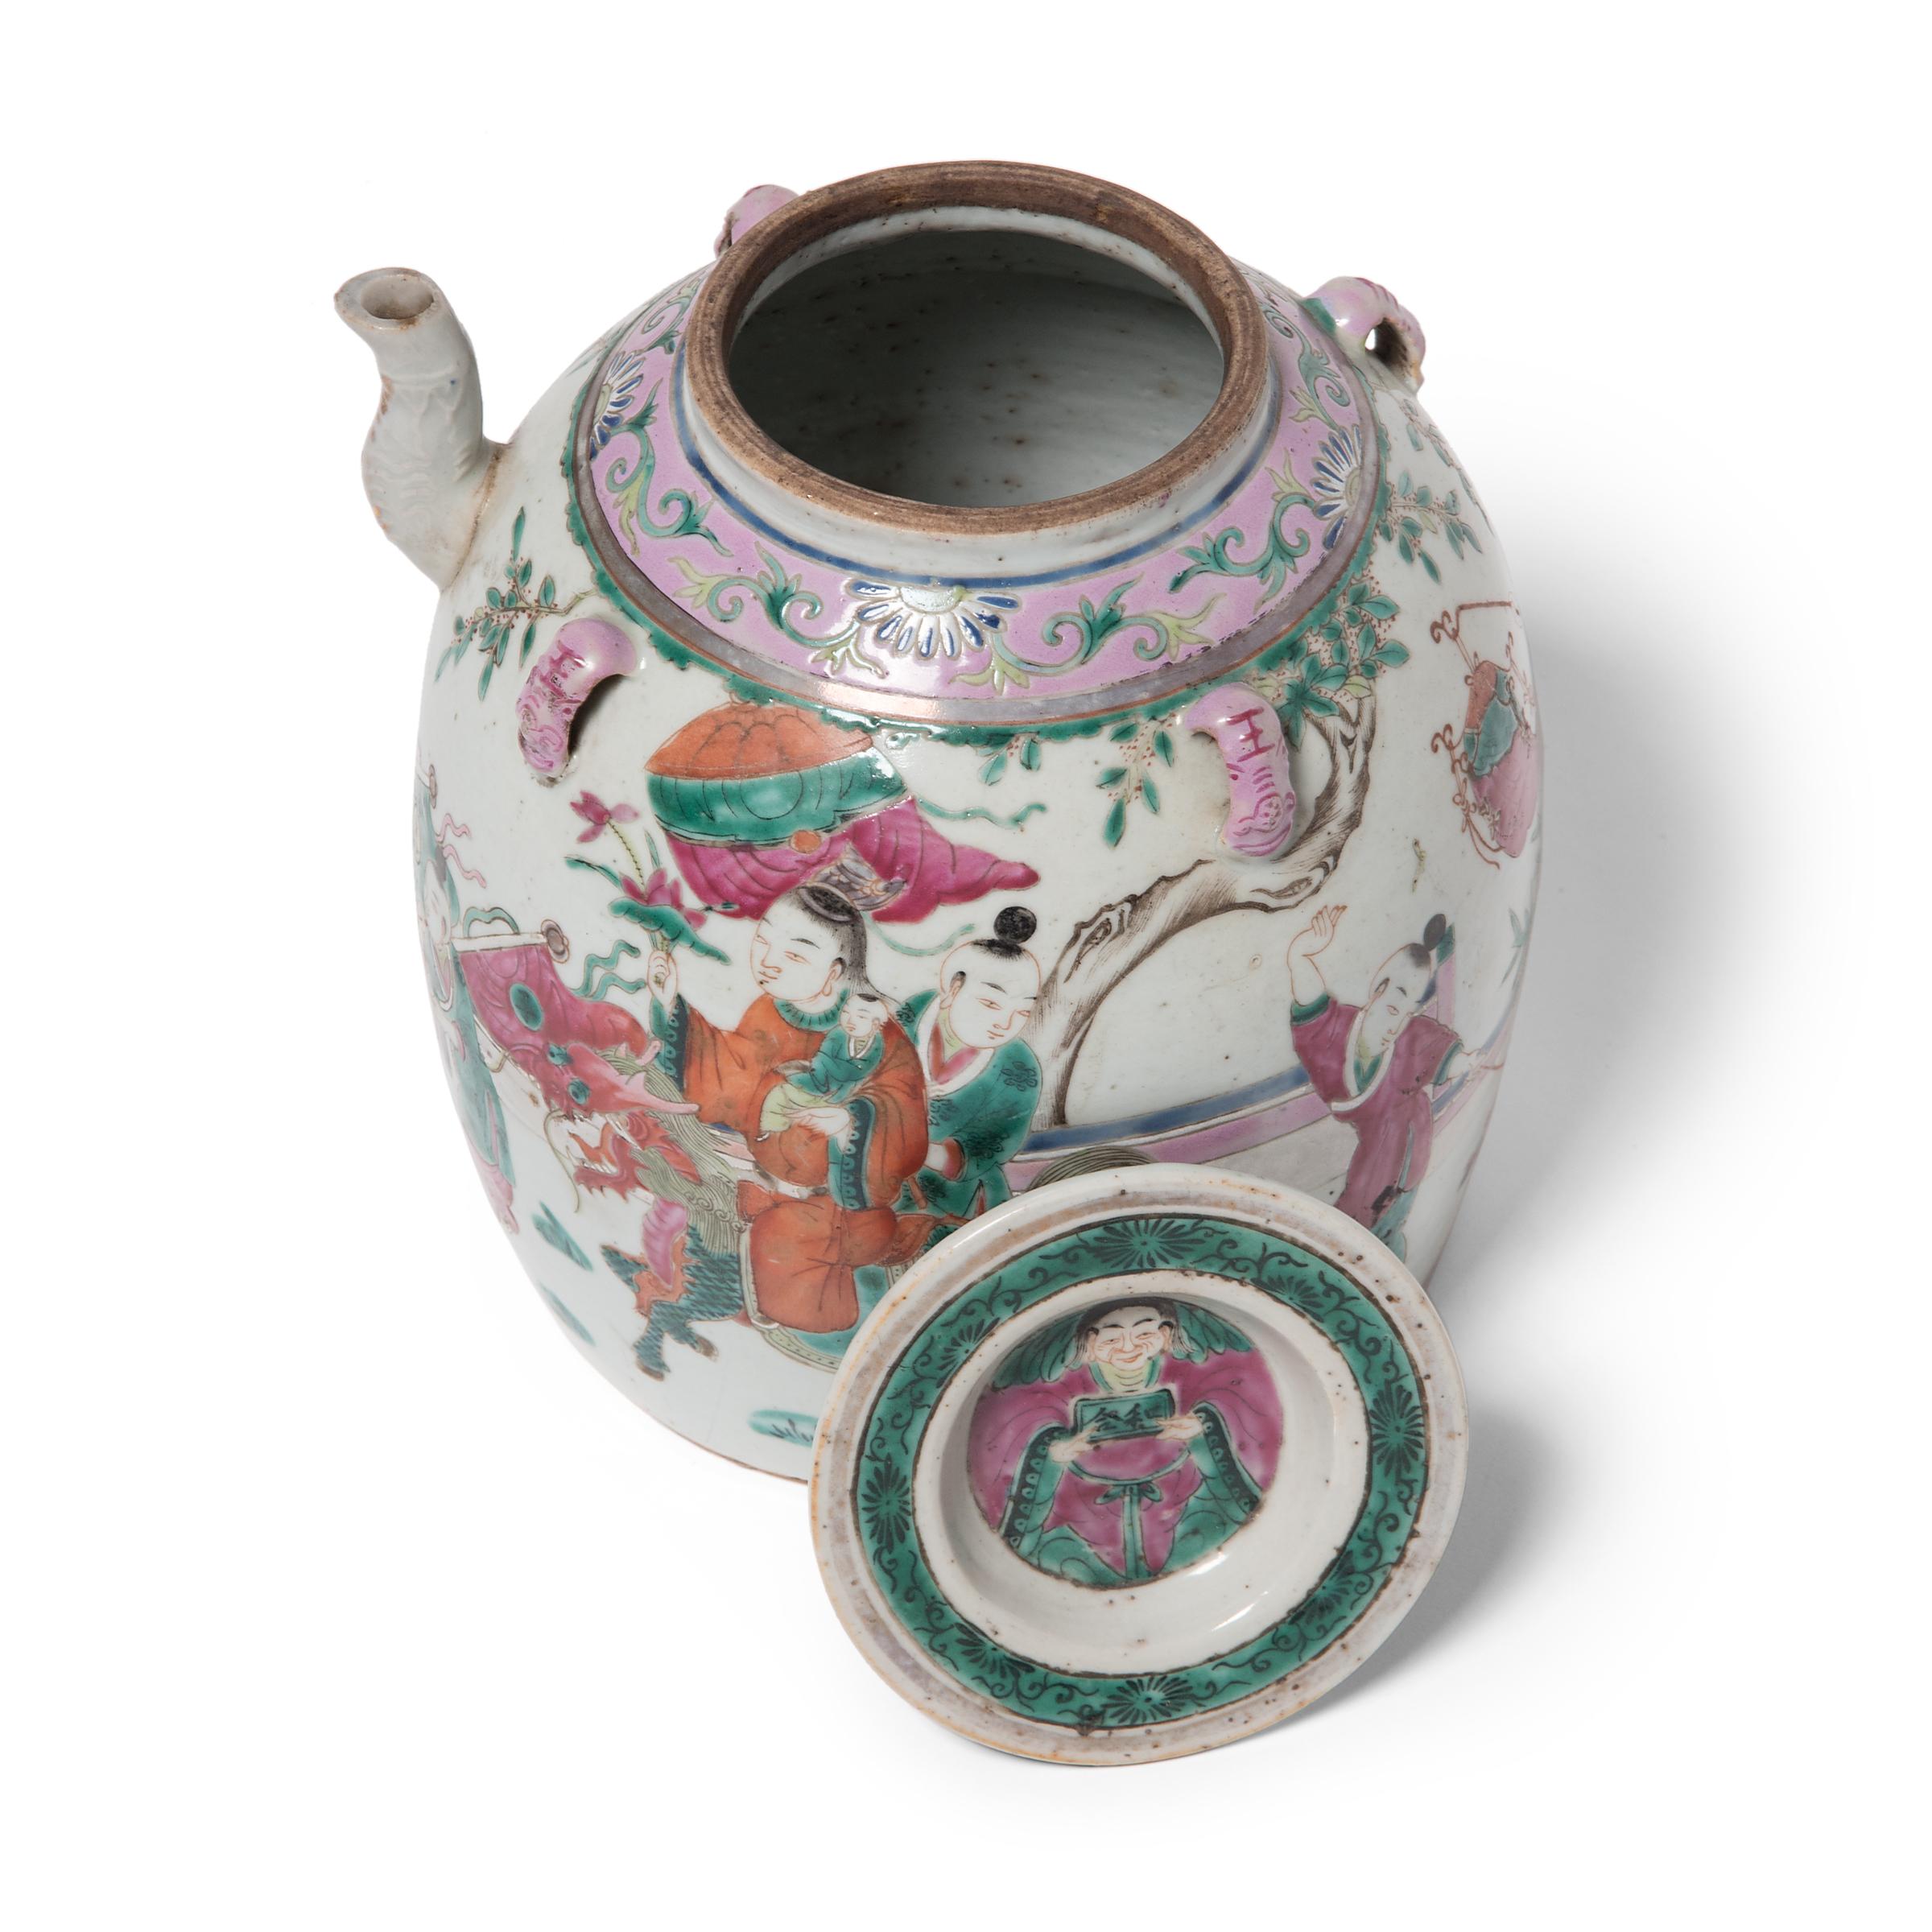 Enameled Chinese Enamelware Teapot with Goddess of Fertility, c. 1920